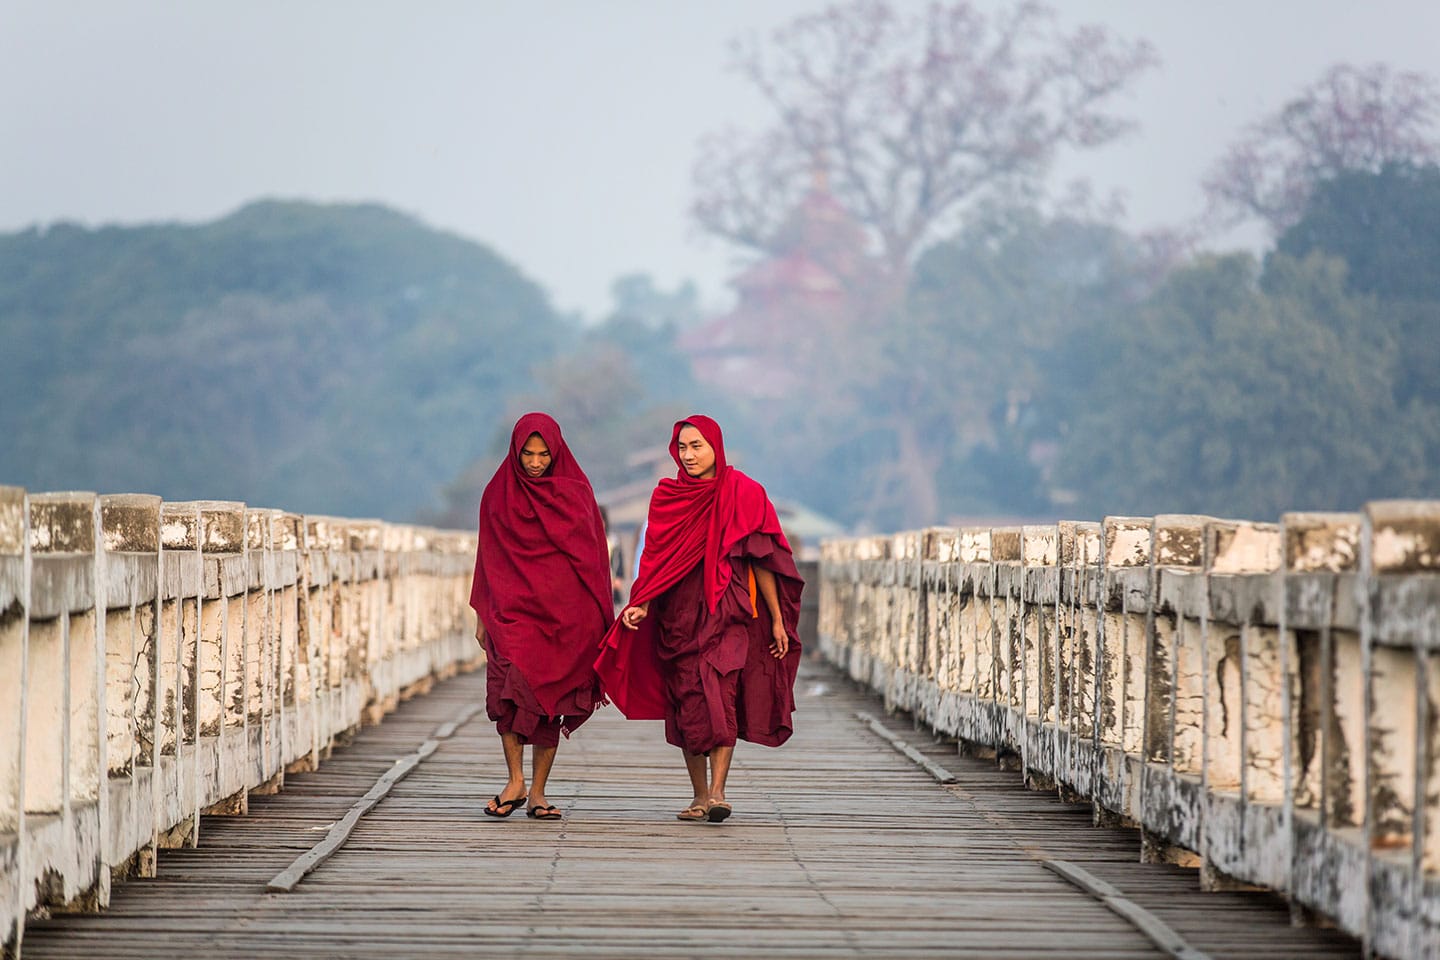 Young monks on the U Bein Bridge in Mandalay, Myanmar